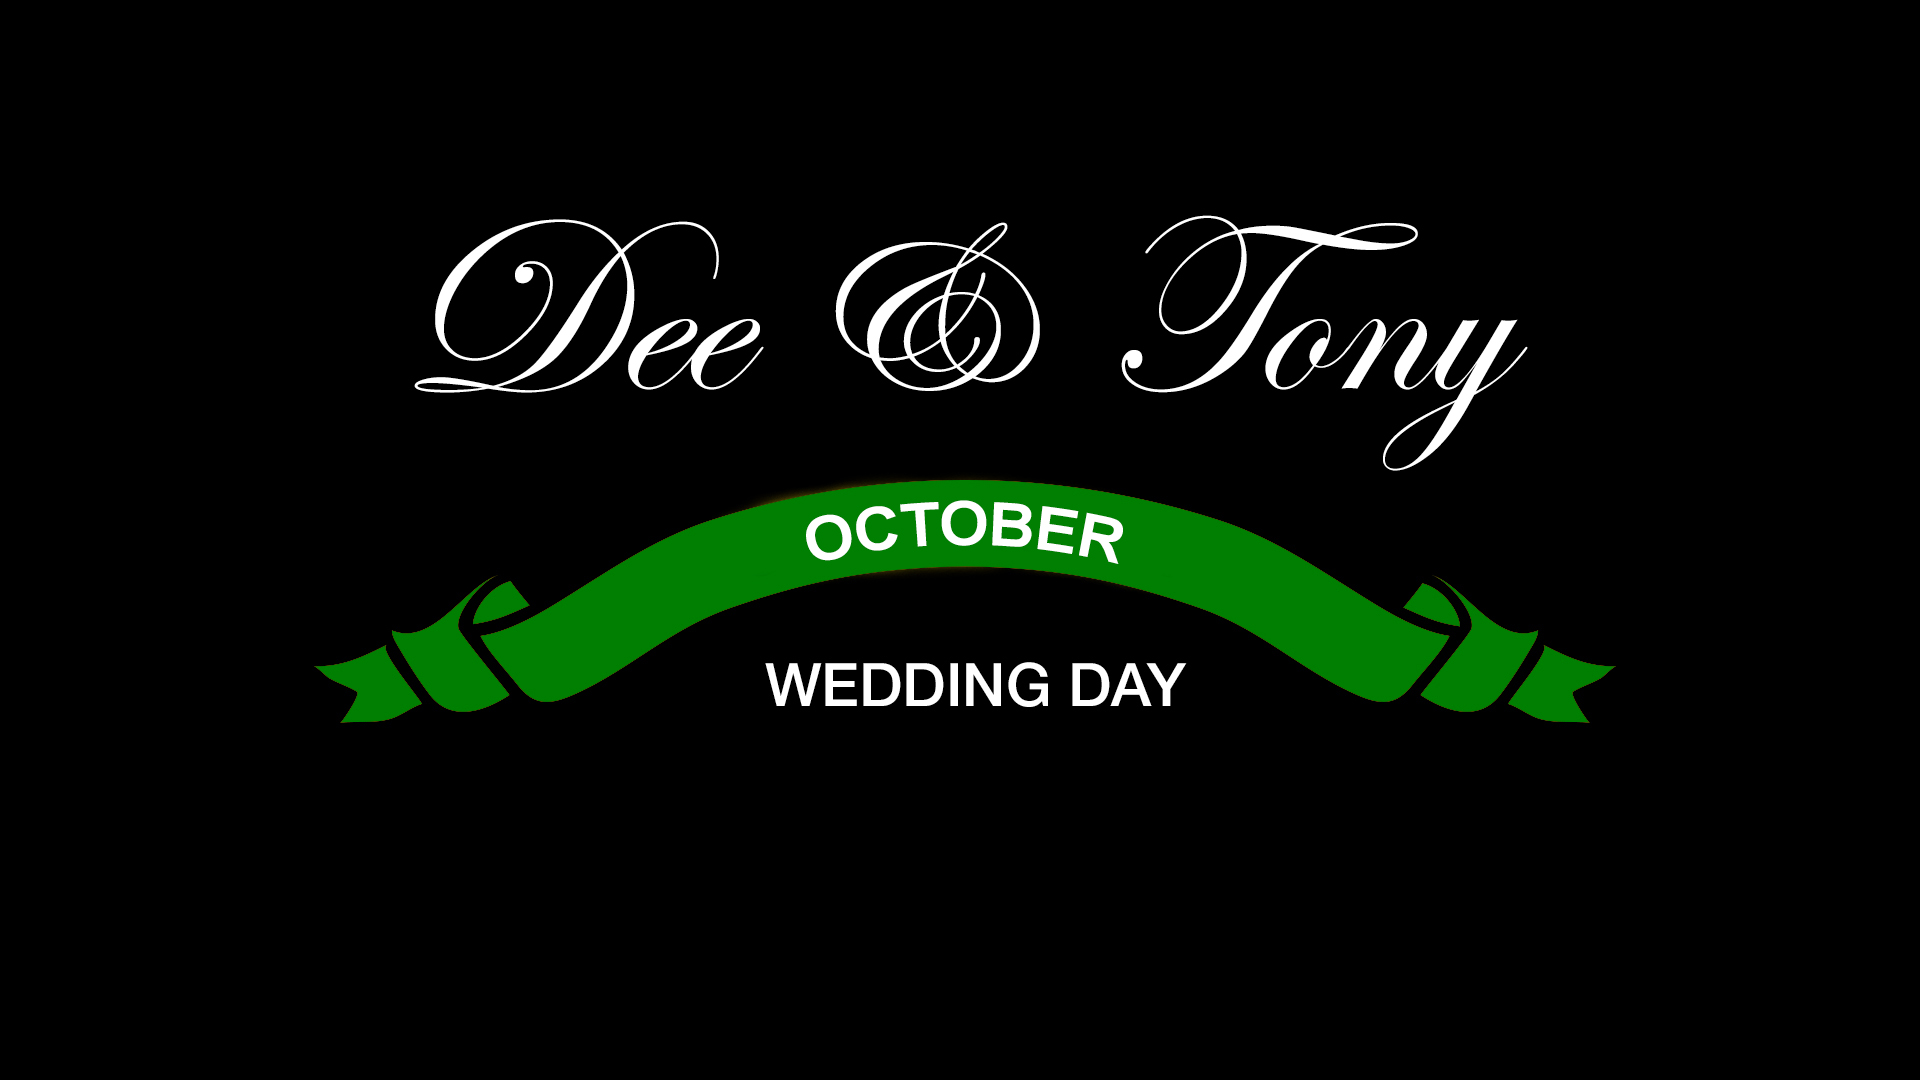 Tony and Dee Wedding